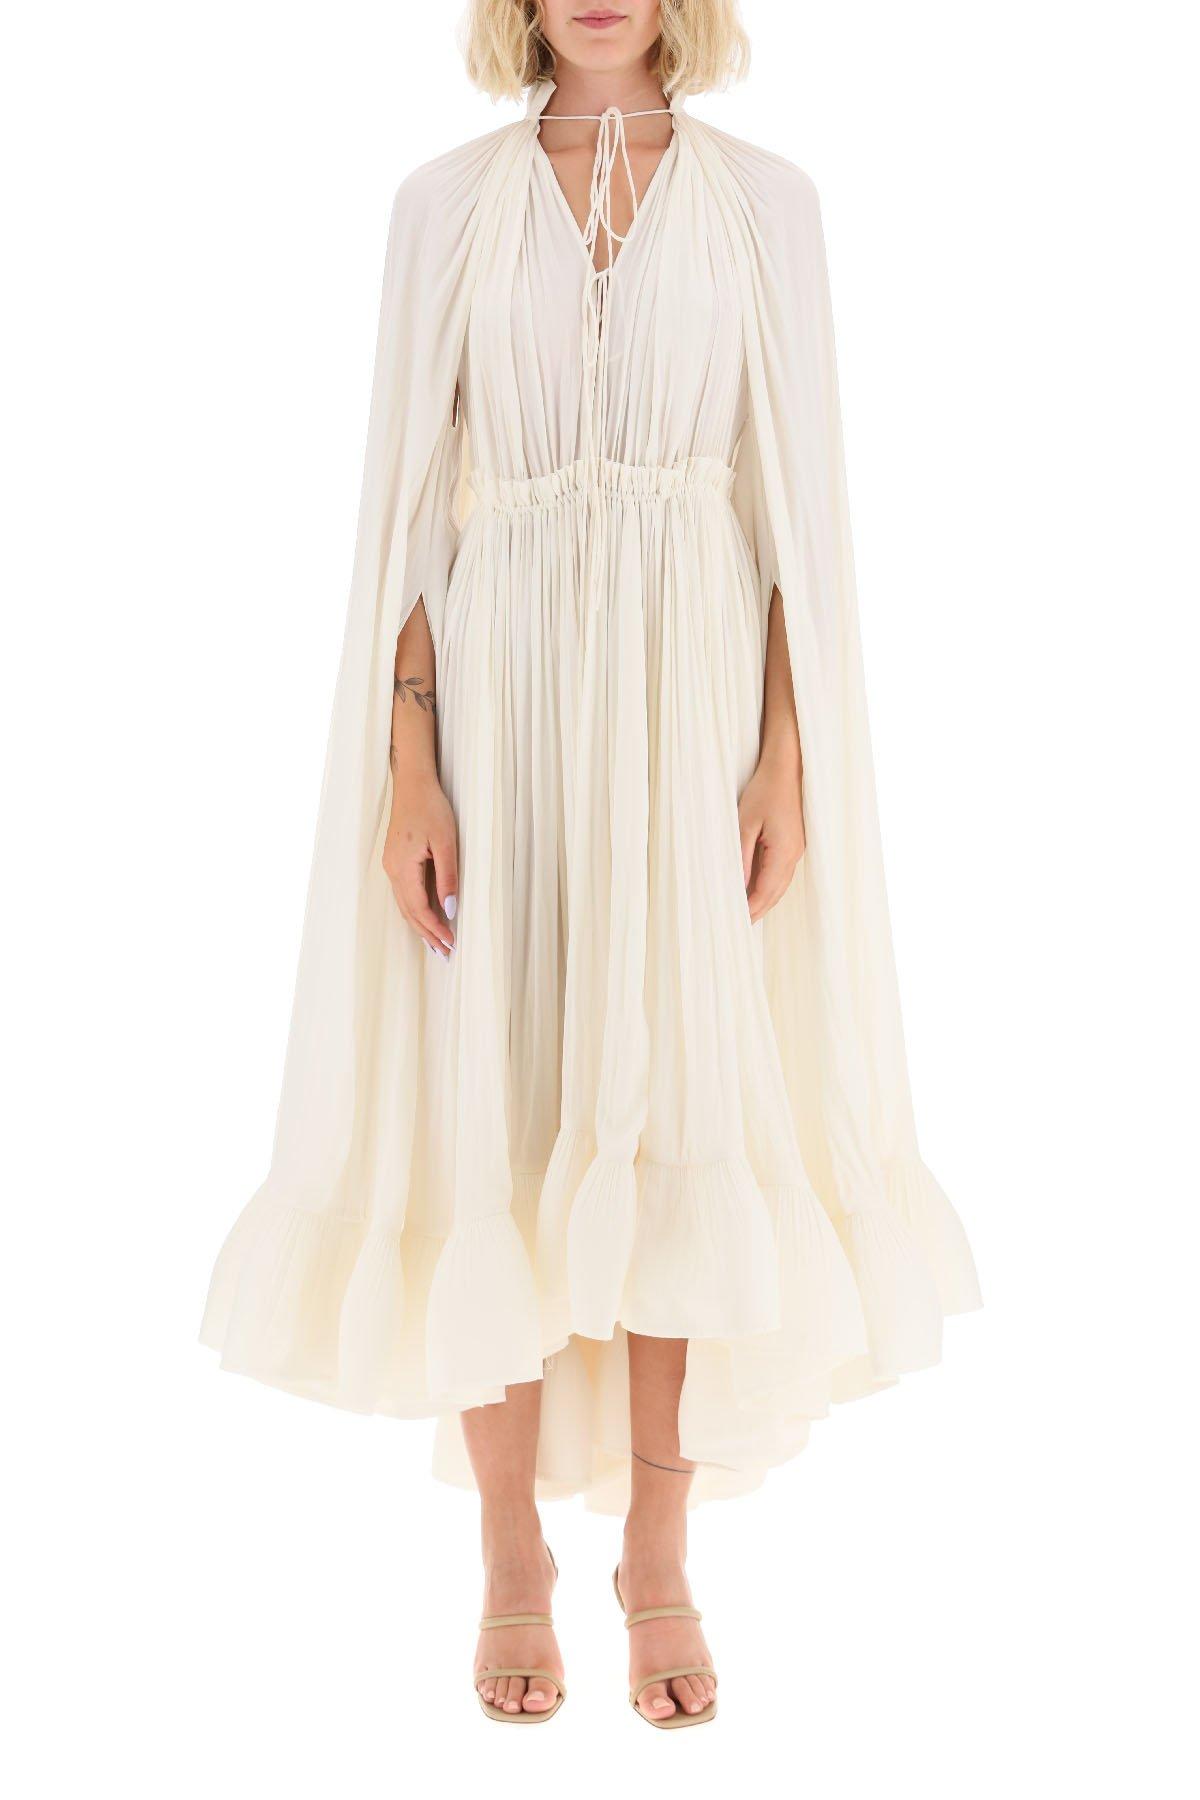 Lanvin Cape Style Ruffled Dress in White | Lyst